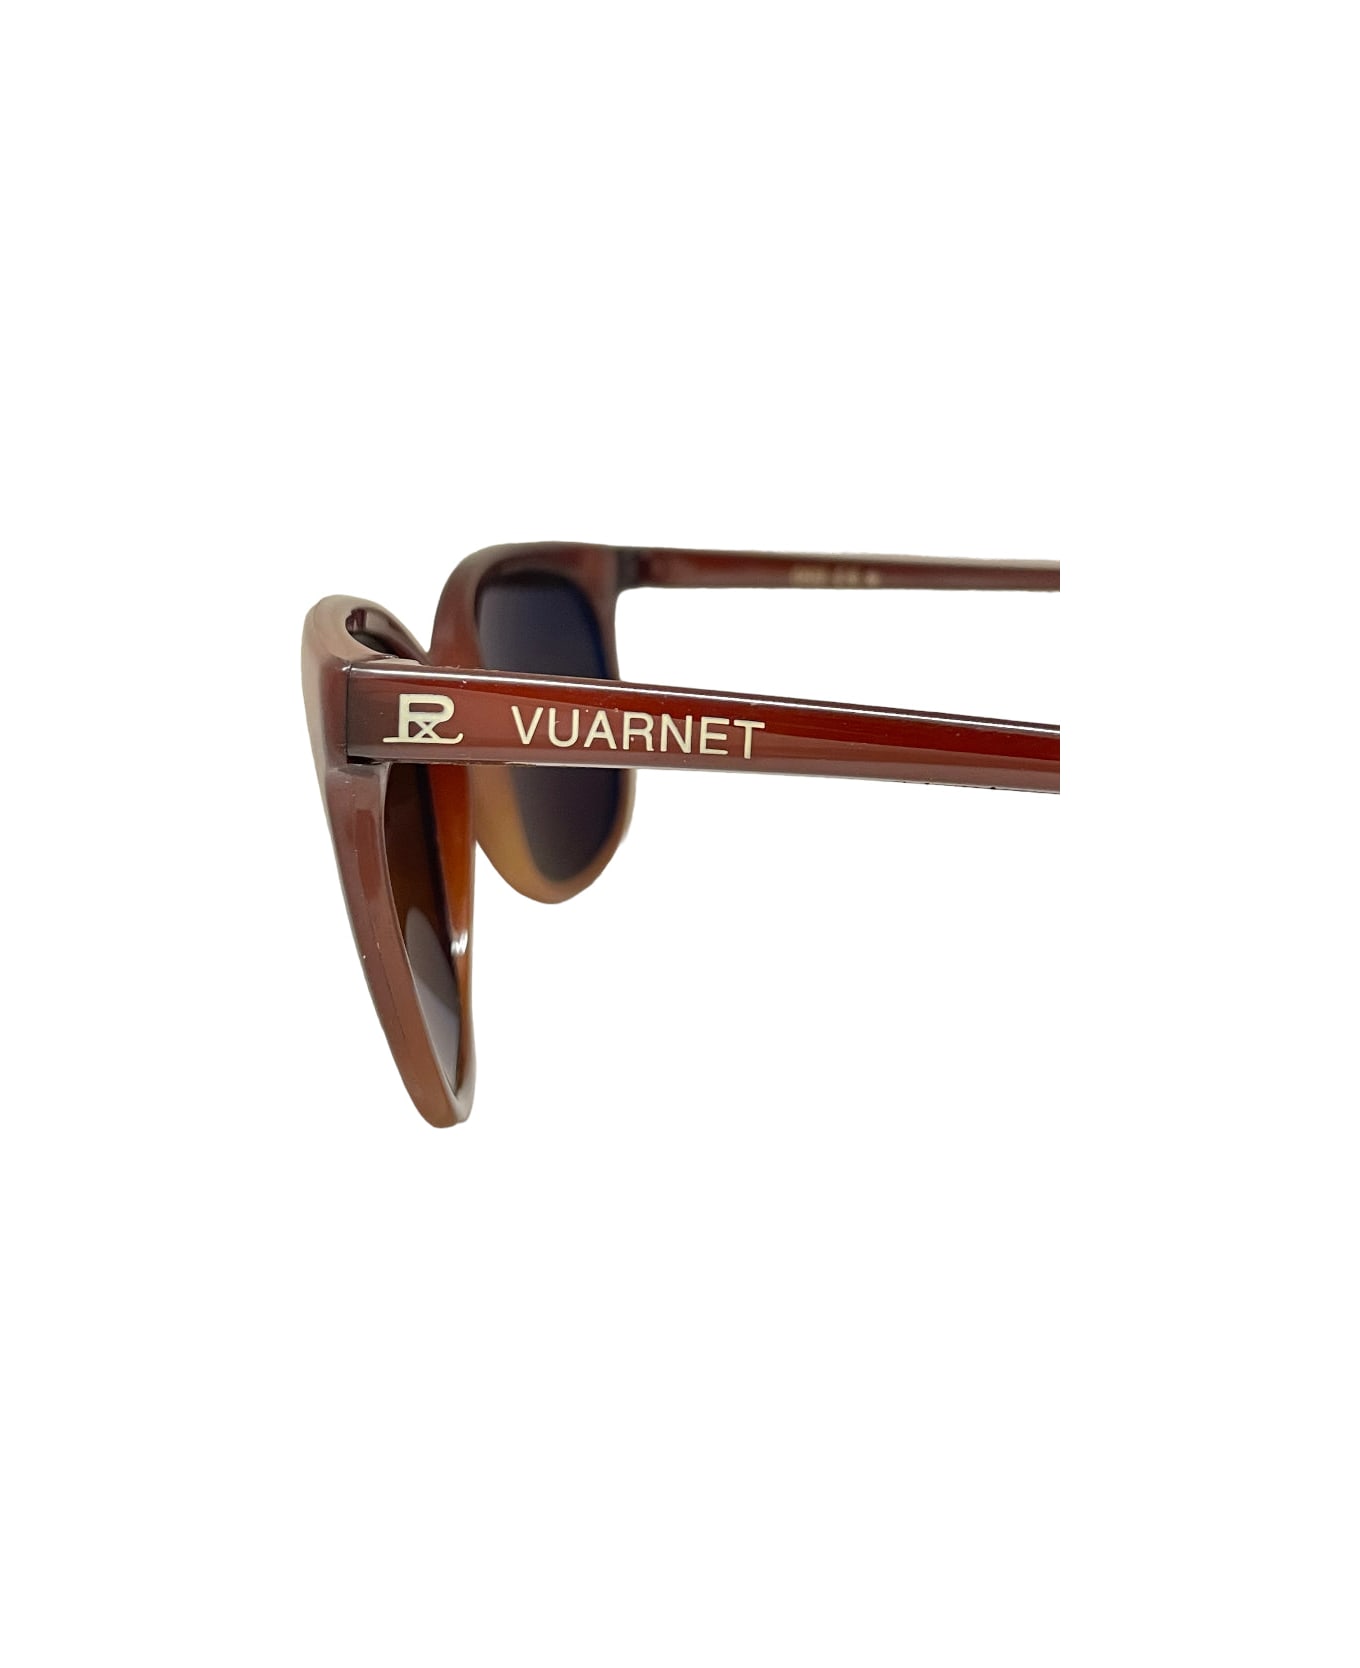 Vuarnet Pouilloux 002 - Brown Sunglasses サングラス